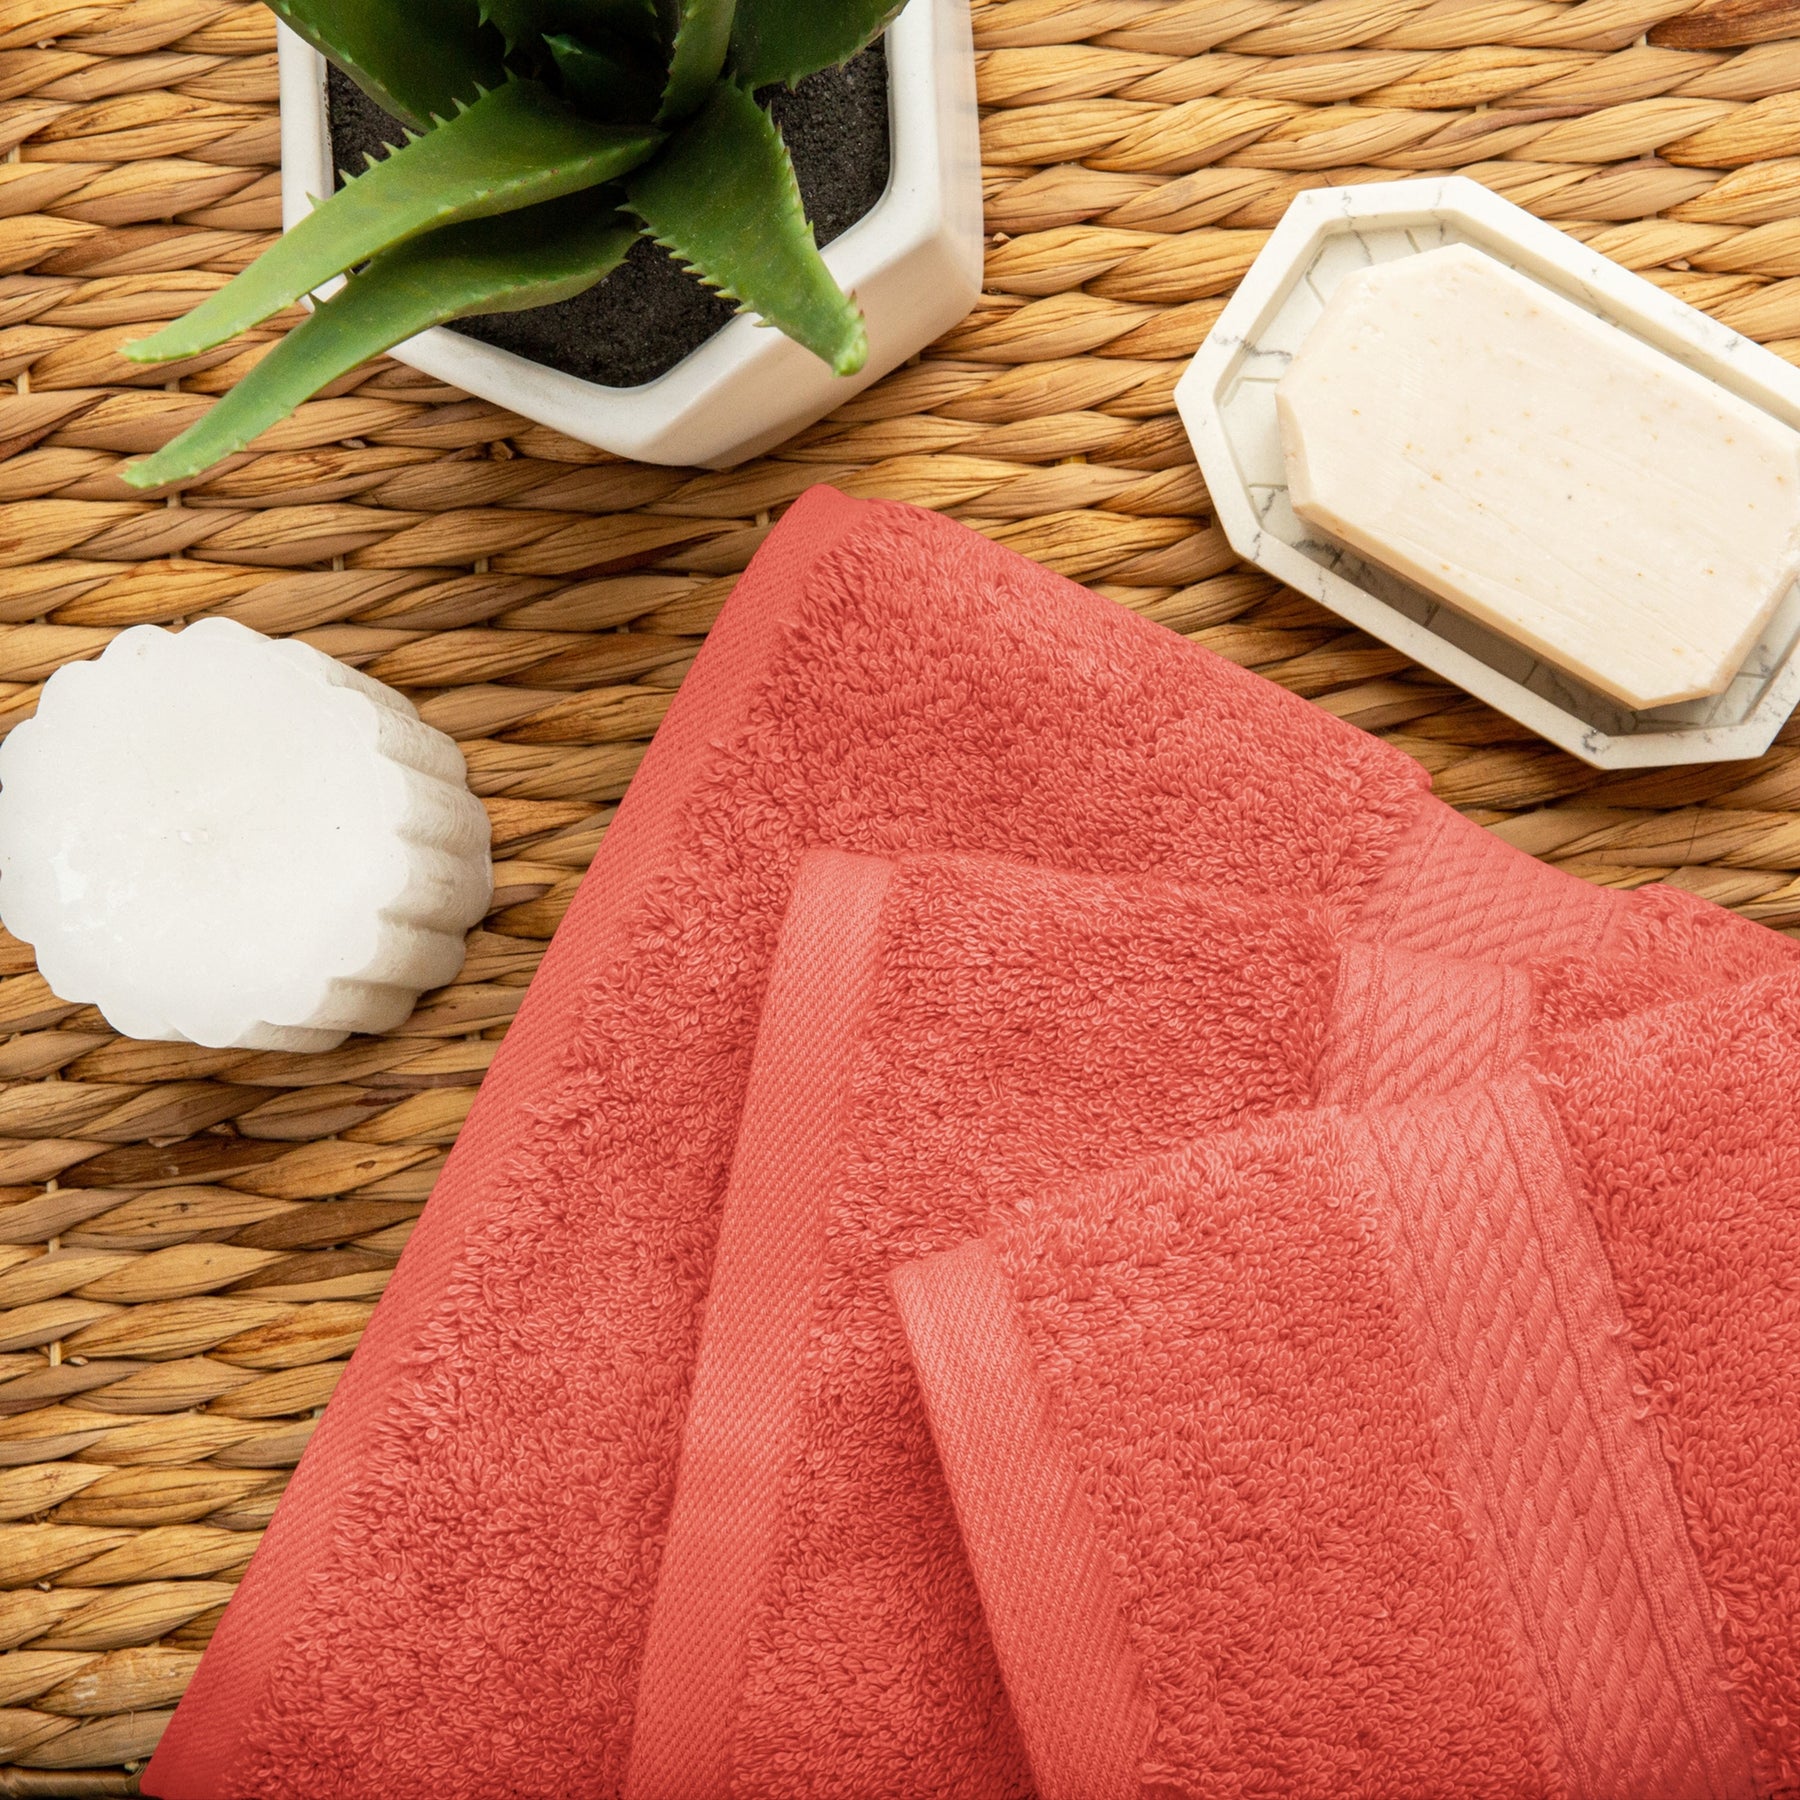 Egyptian Cotton Heavyweight 3 Piece Bath Towel Set - Coral